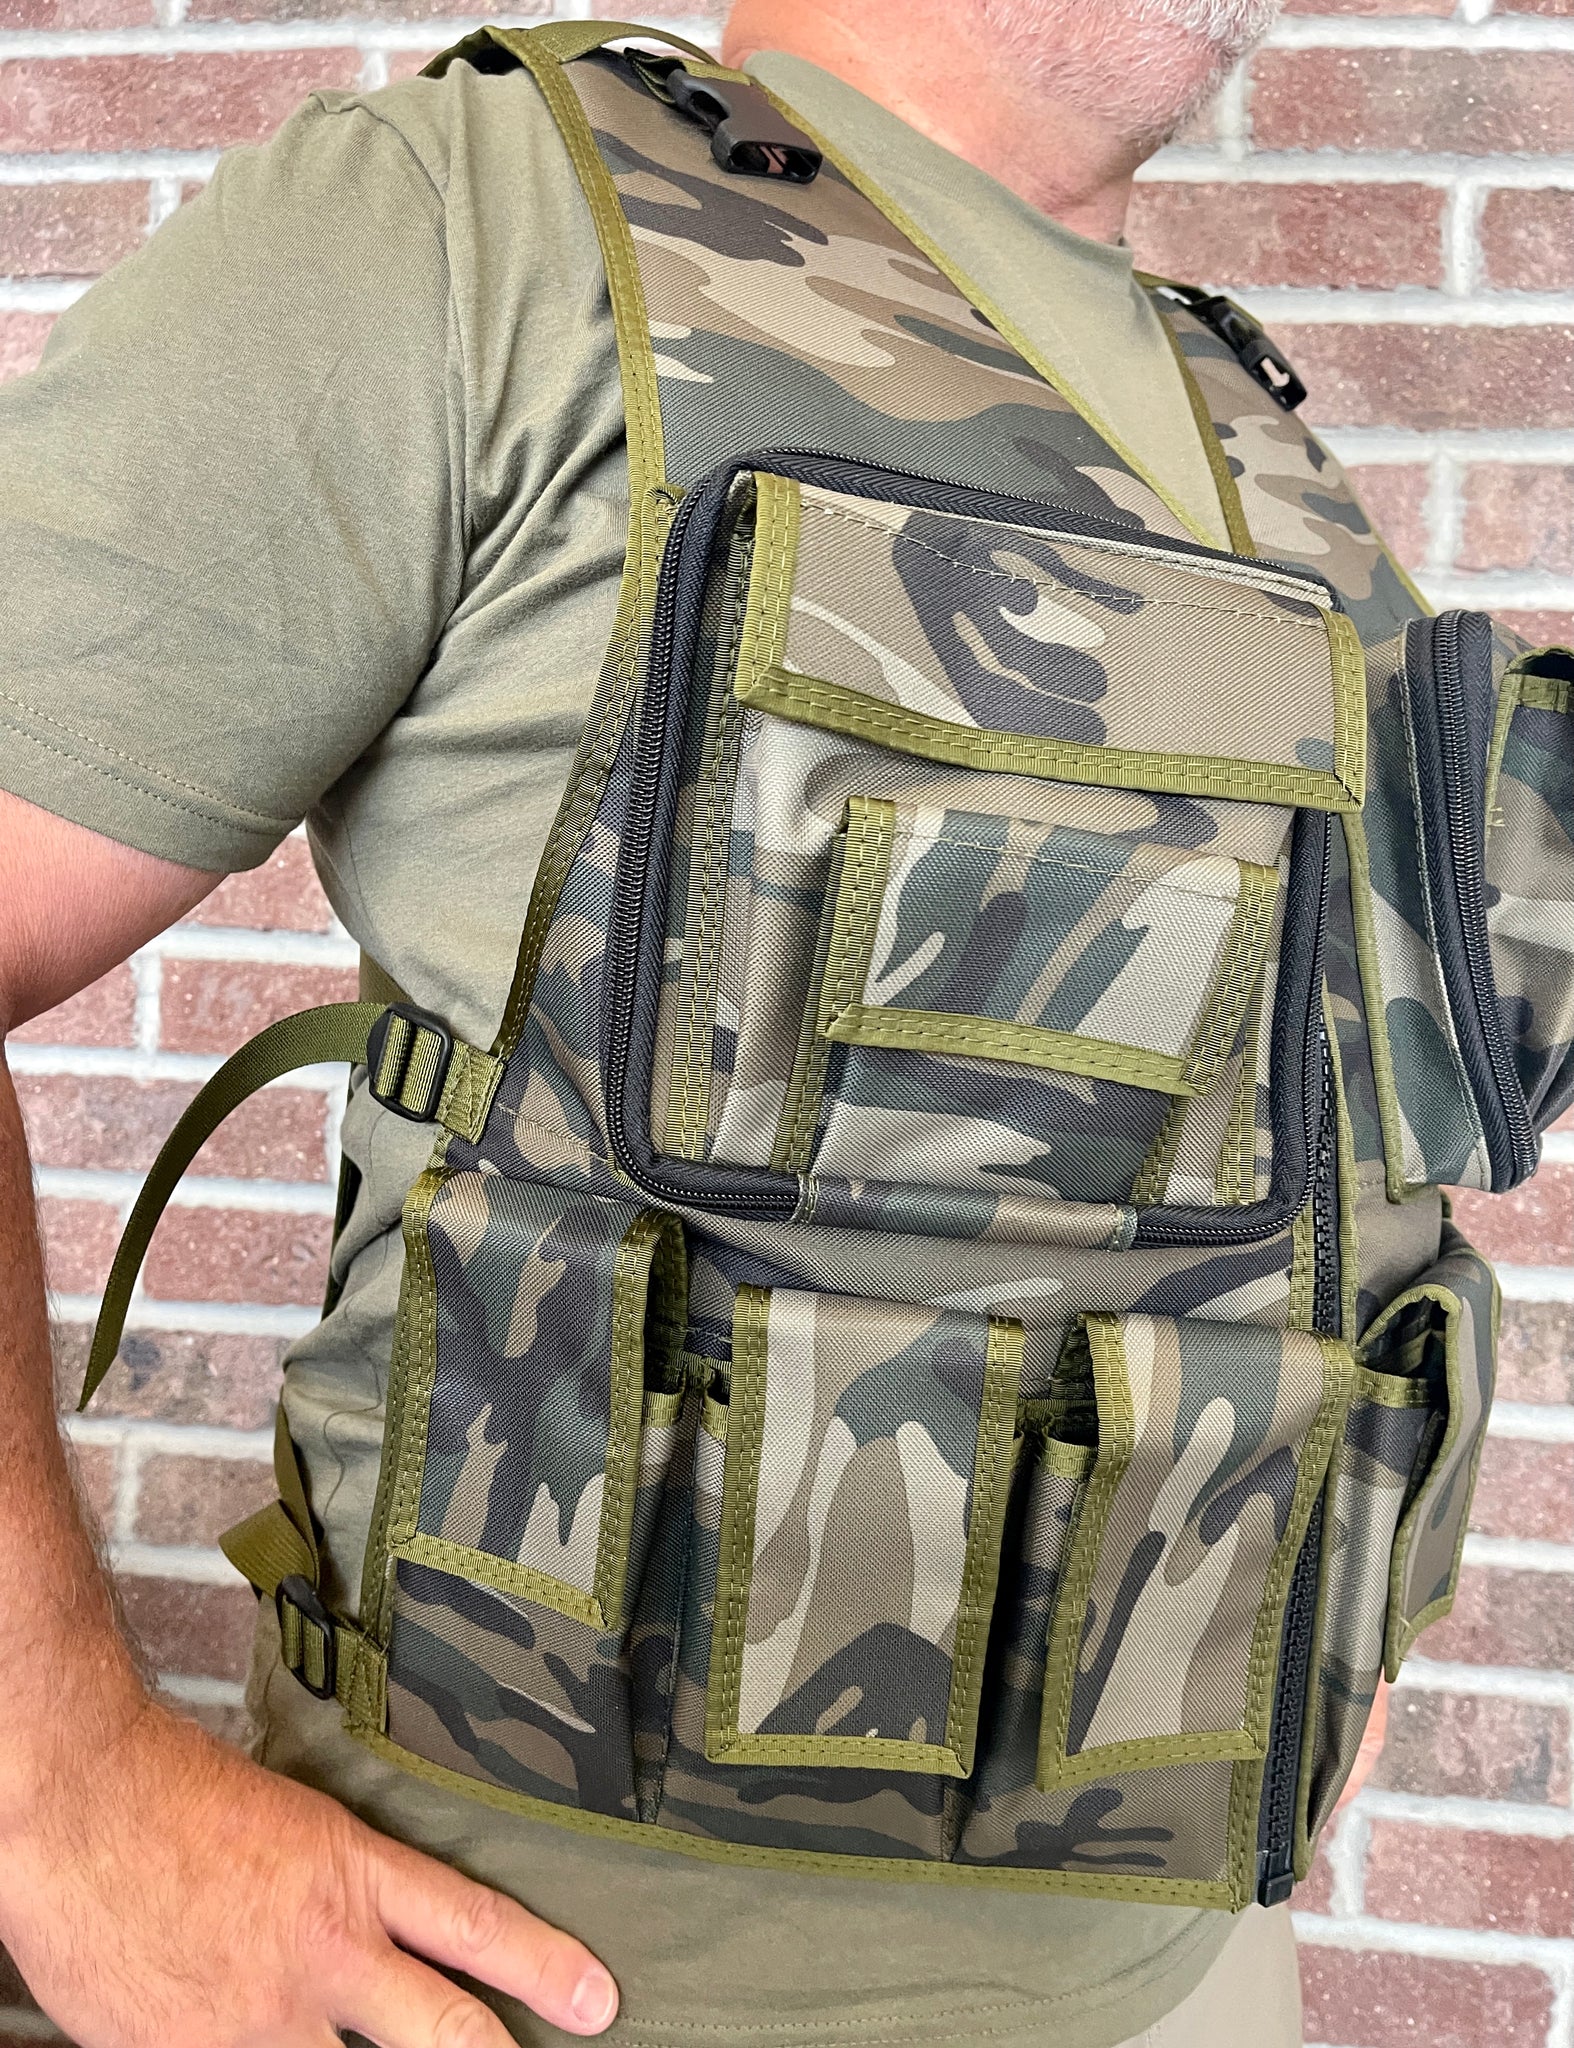 AR 15 Tactical Vest by The Vest Guy